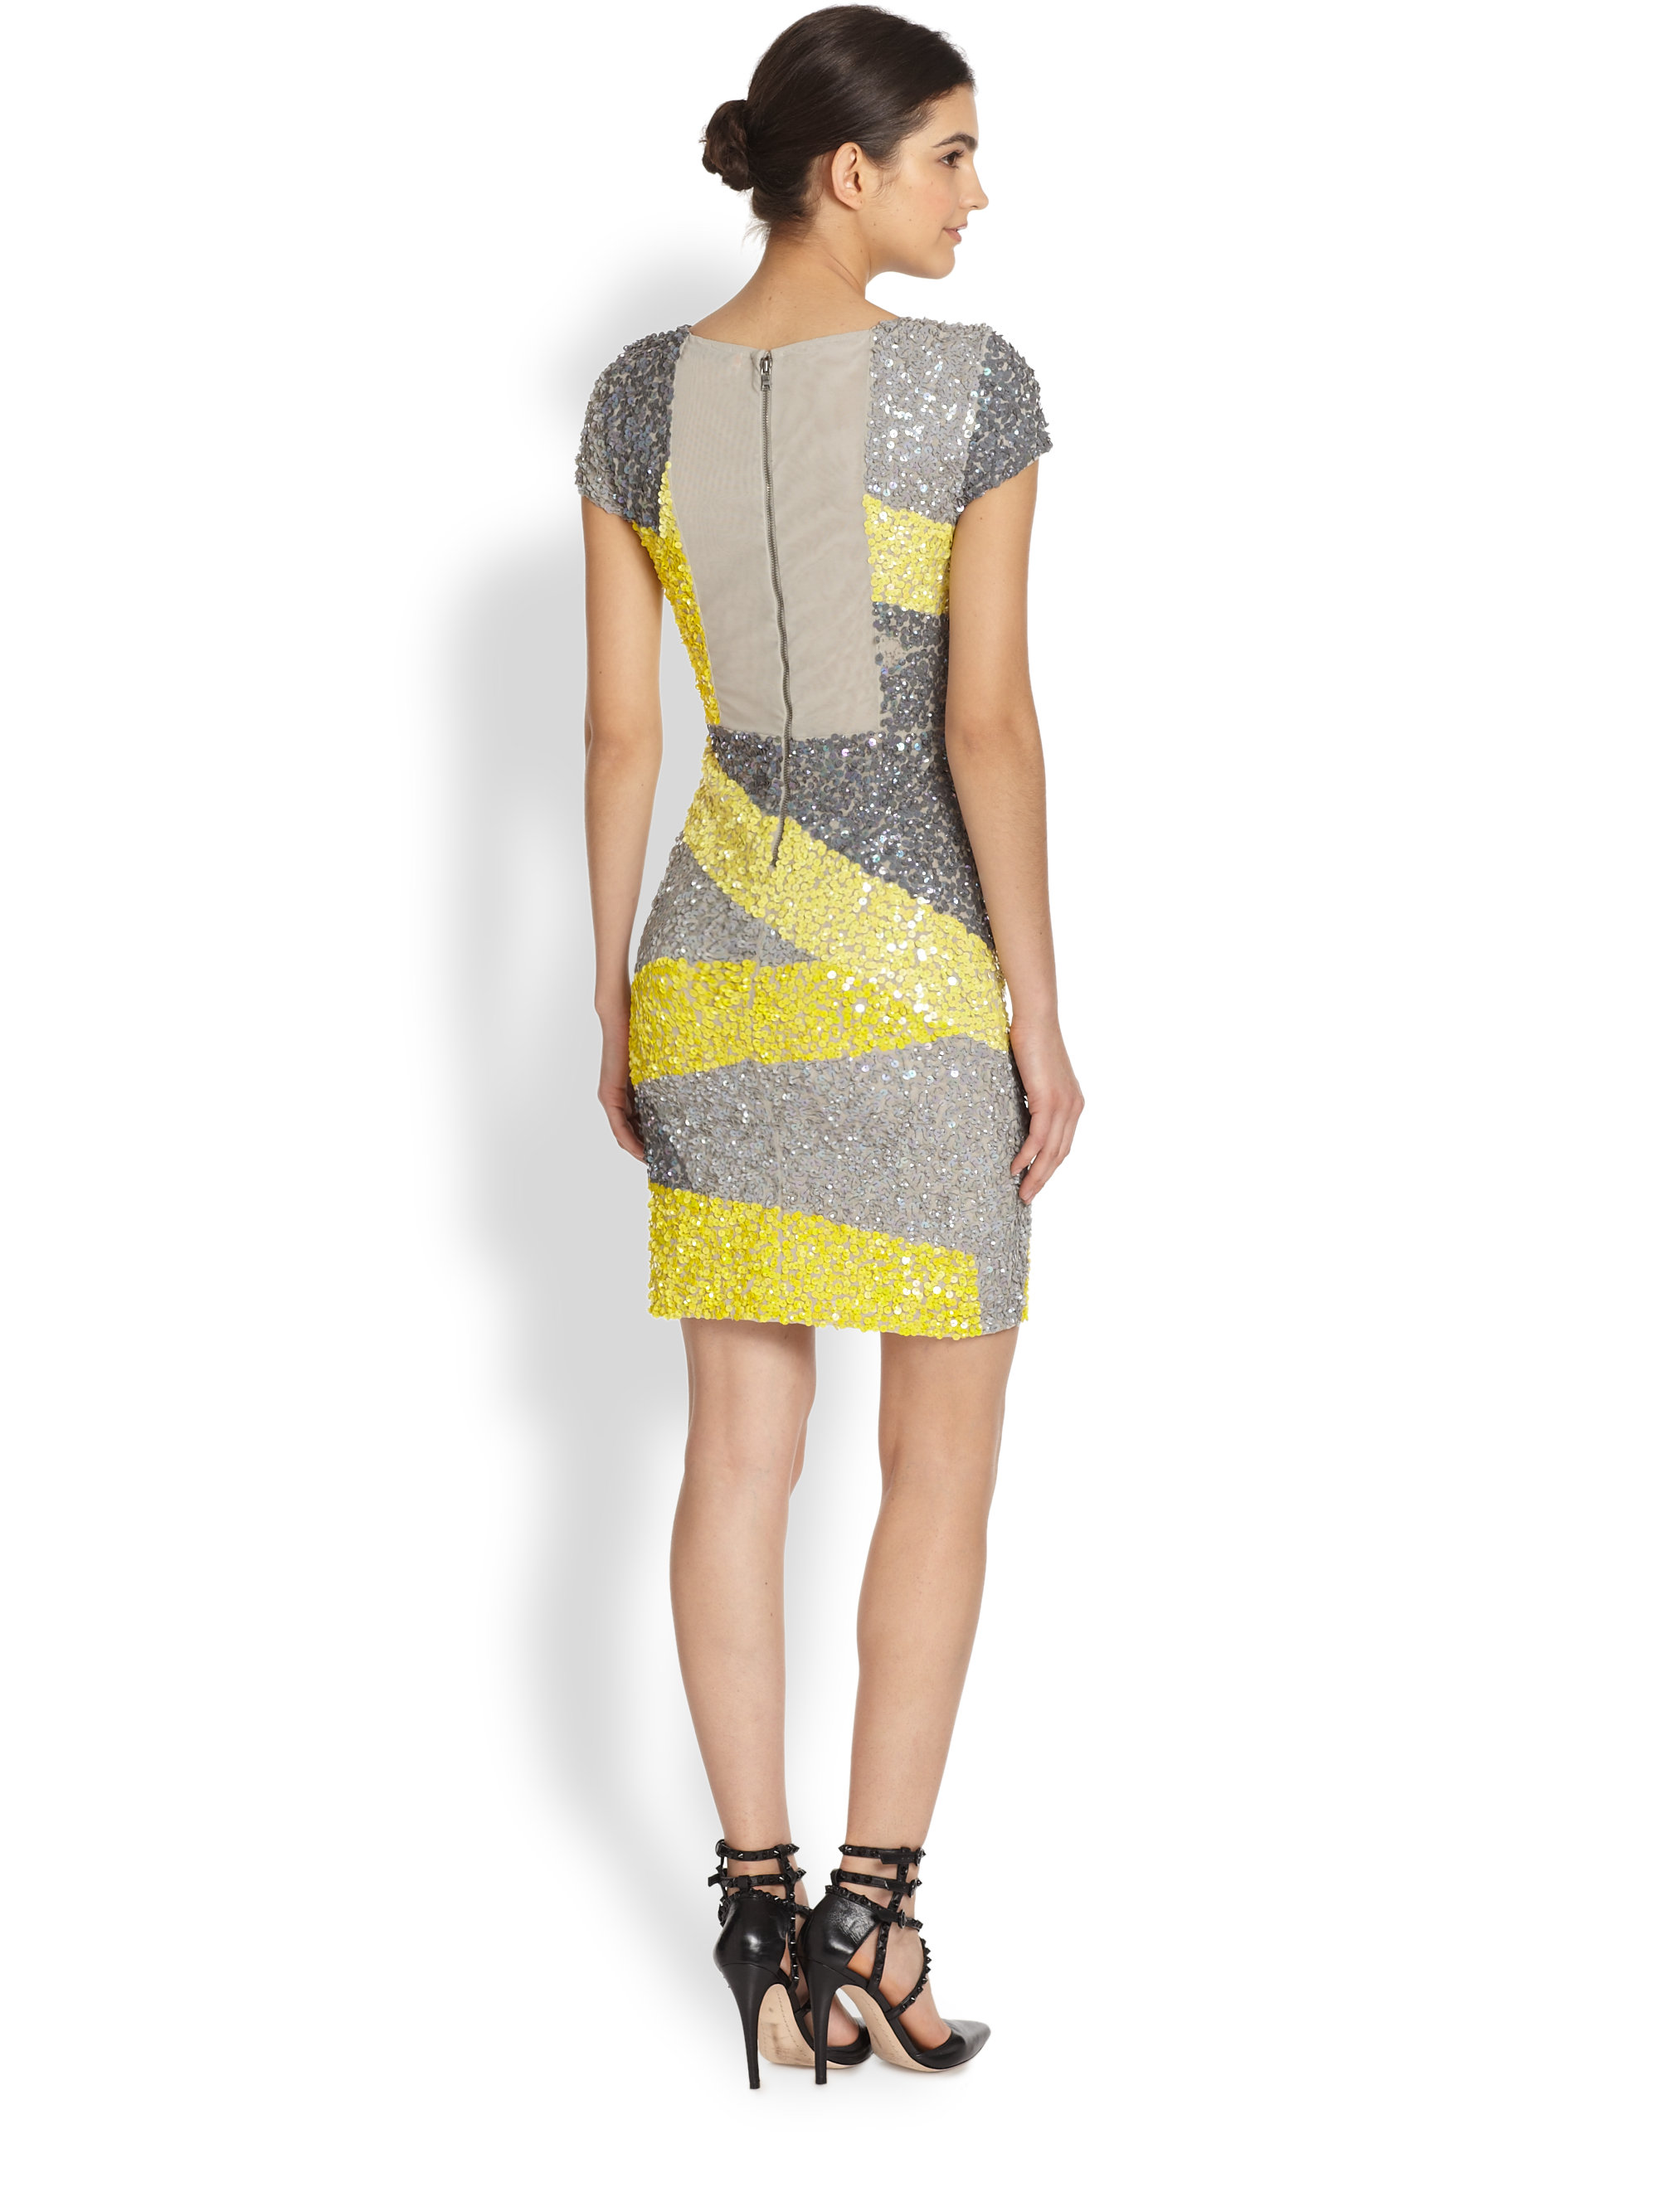 Lyst - Alice + olivia Taryn Colorblock Sequin Dress in Yellow